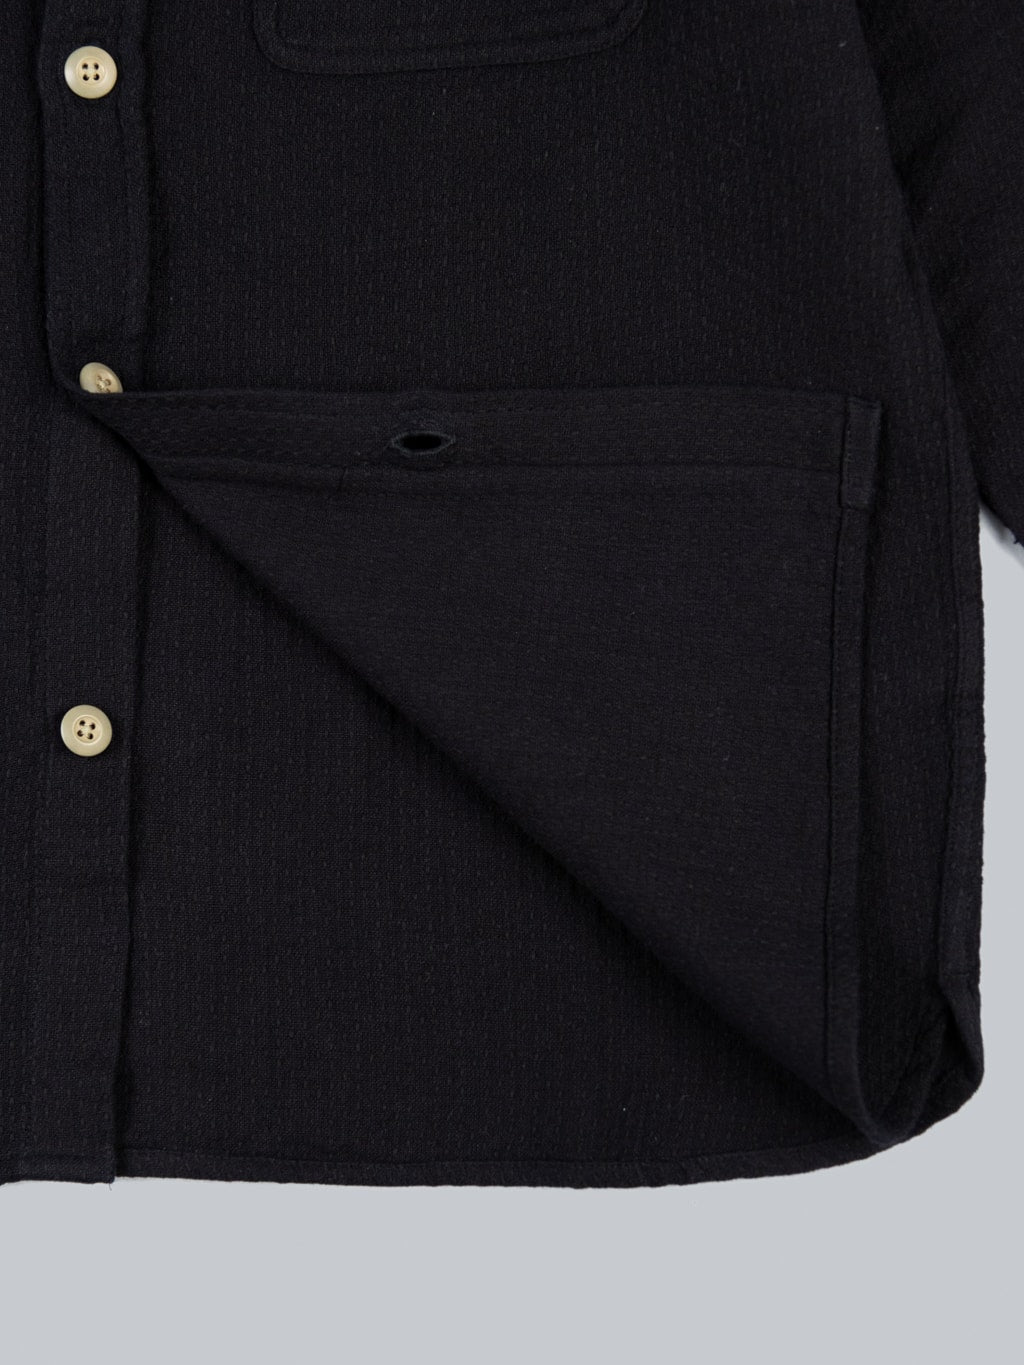 3sixteen CPO Shirt black Sashiko interior  fabric